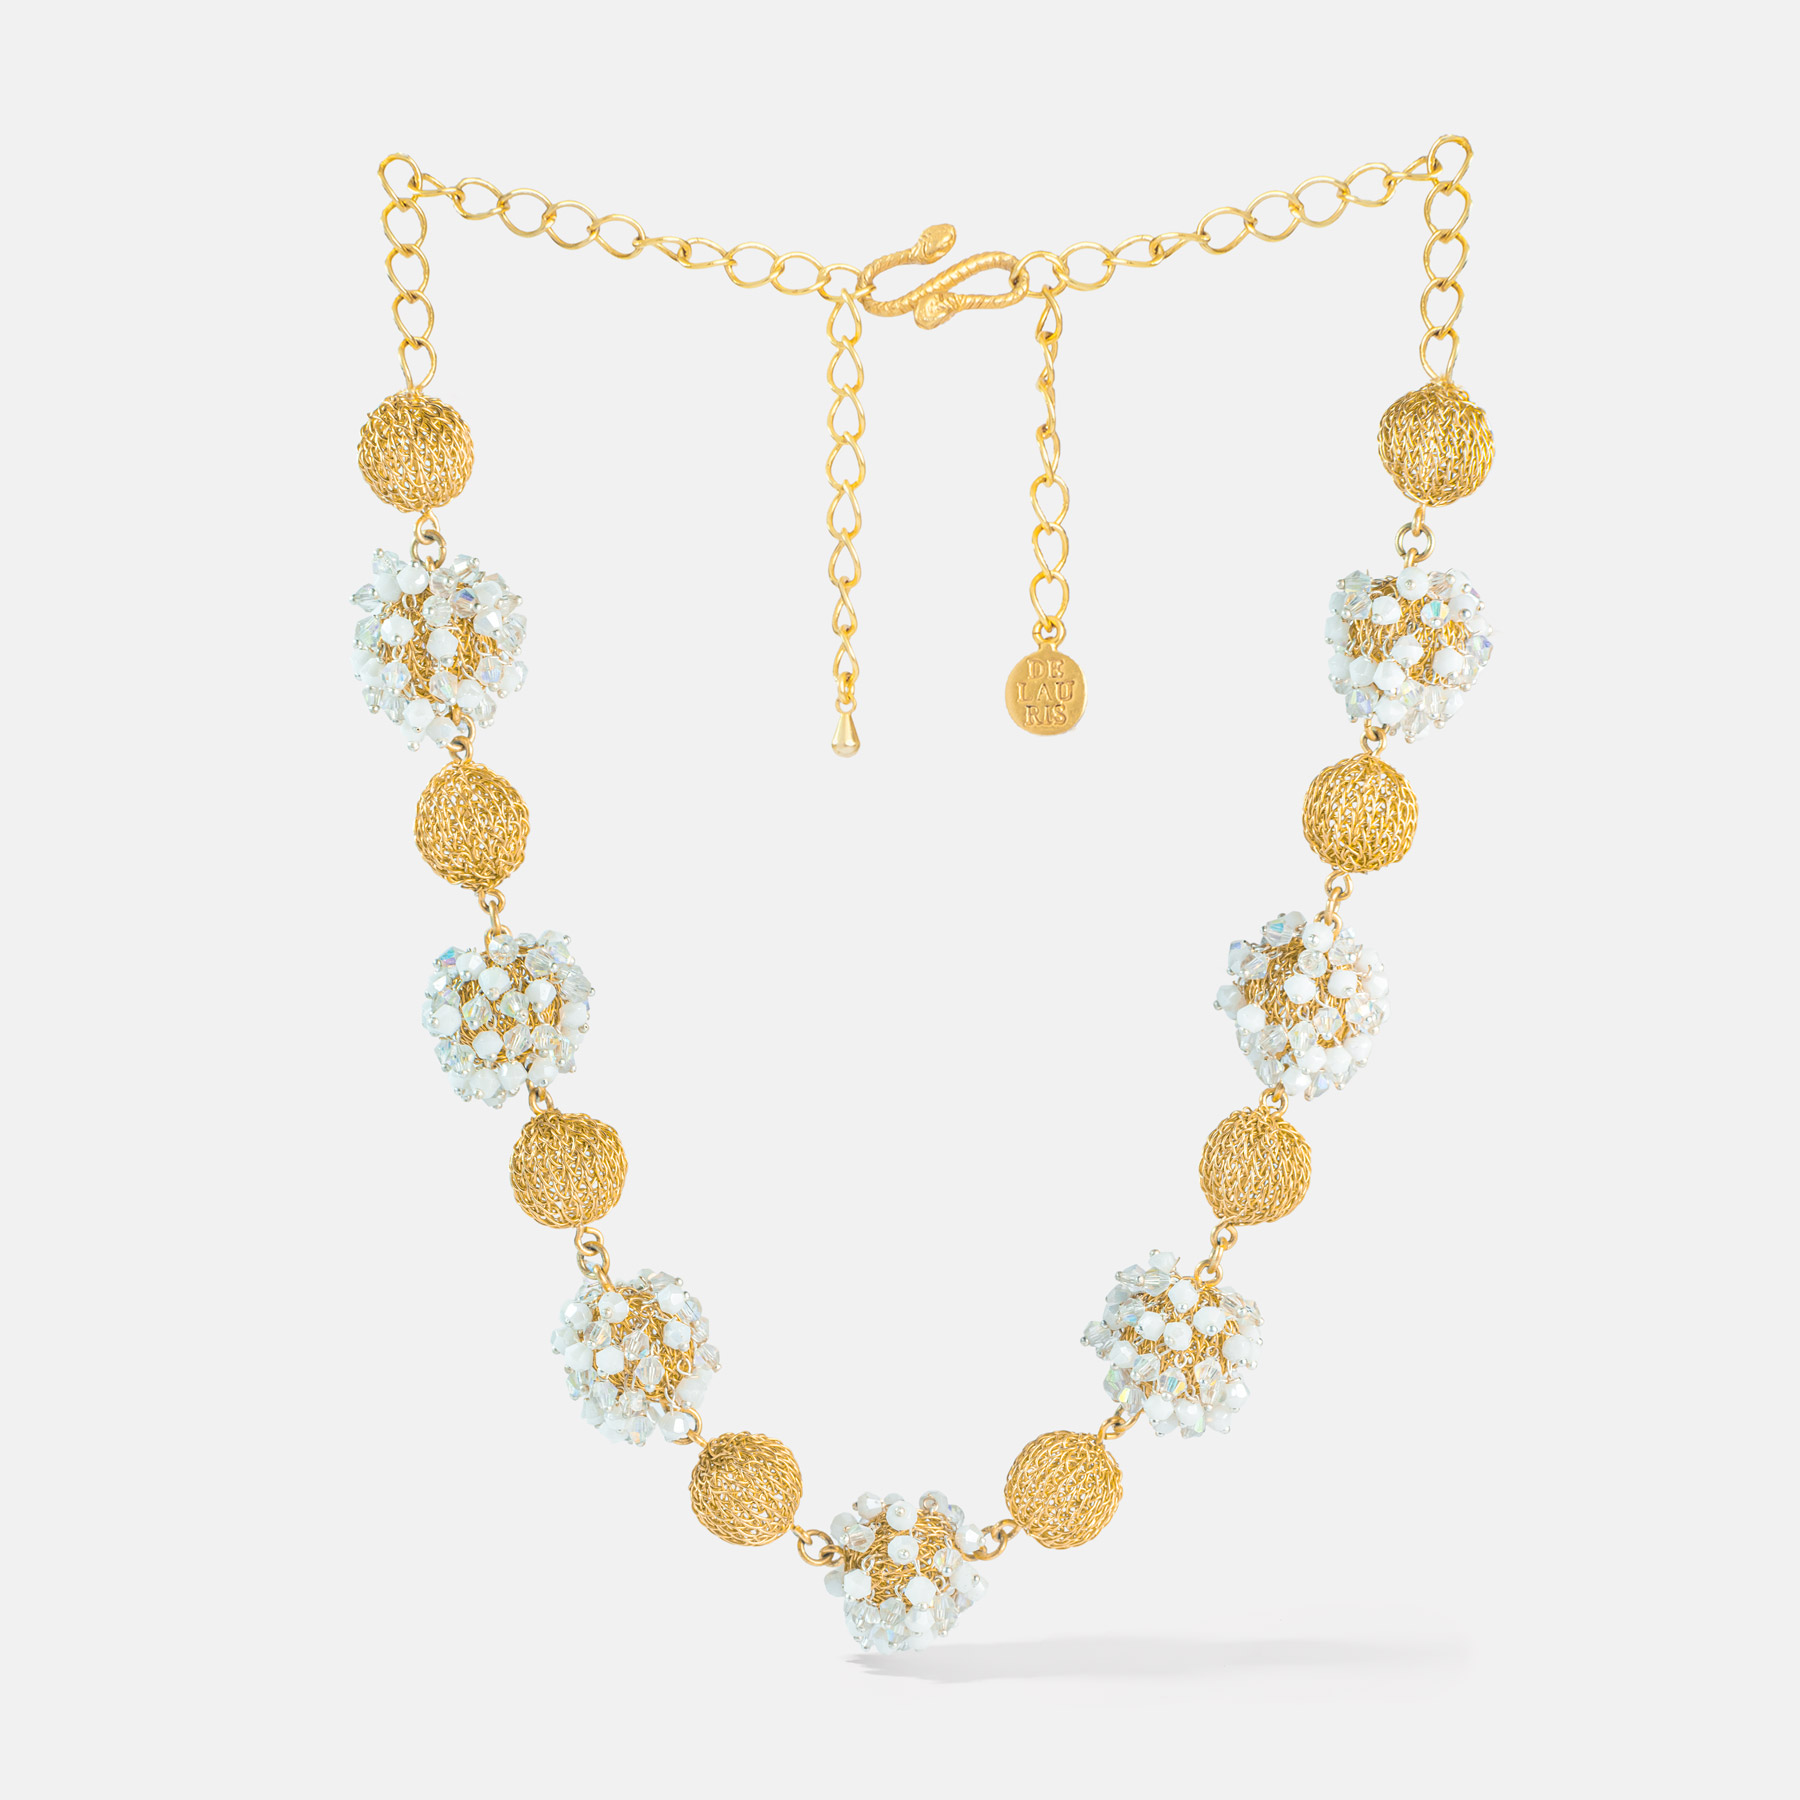 Moira Gold White Necklace Romeo Delauris